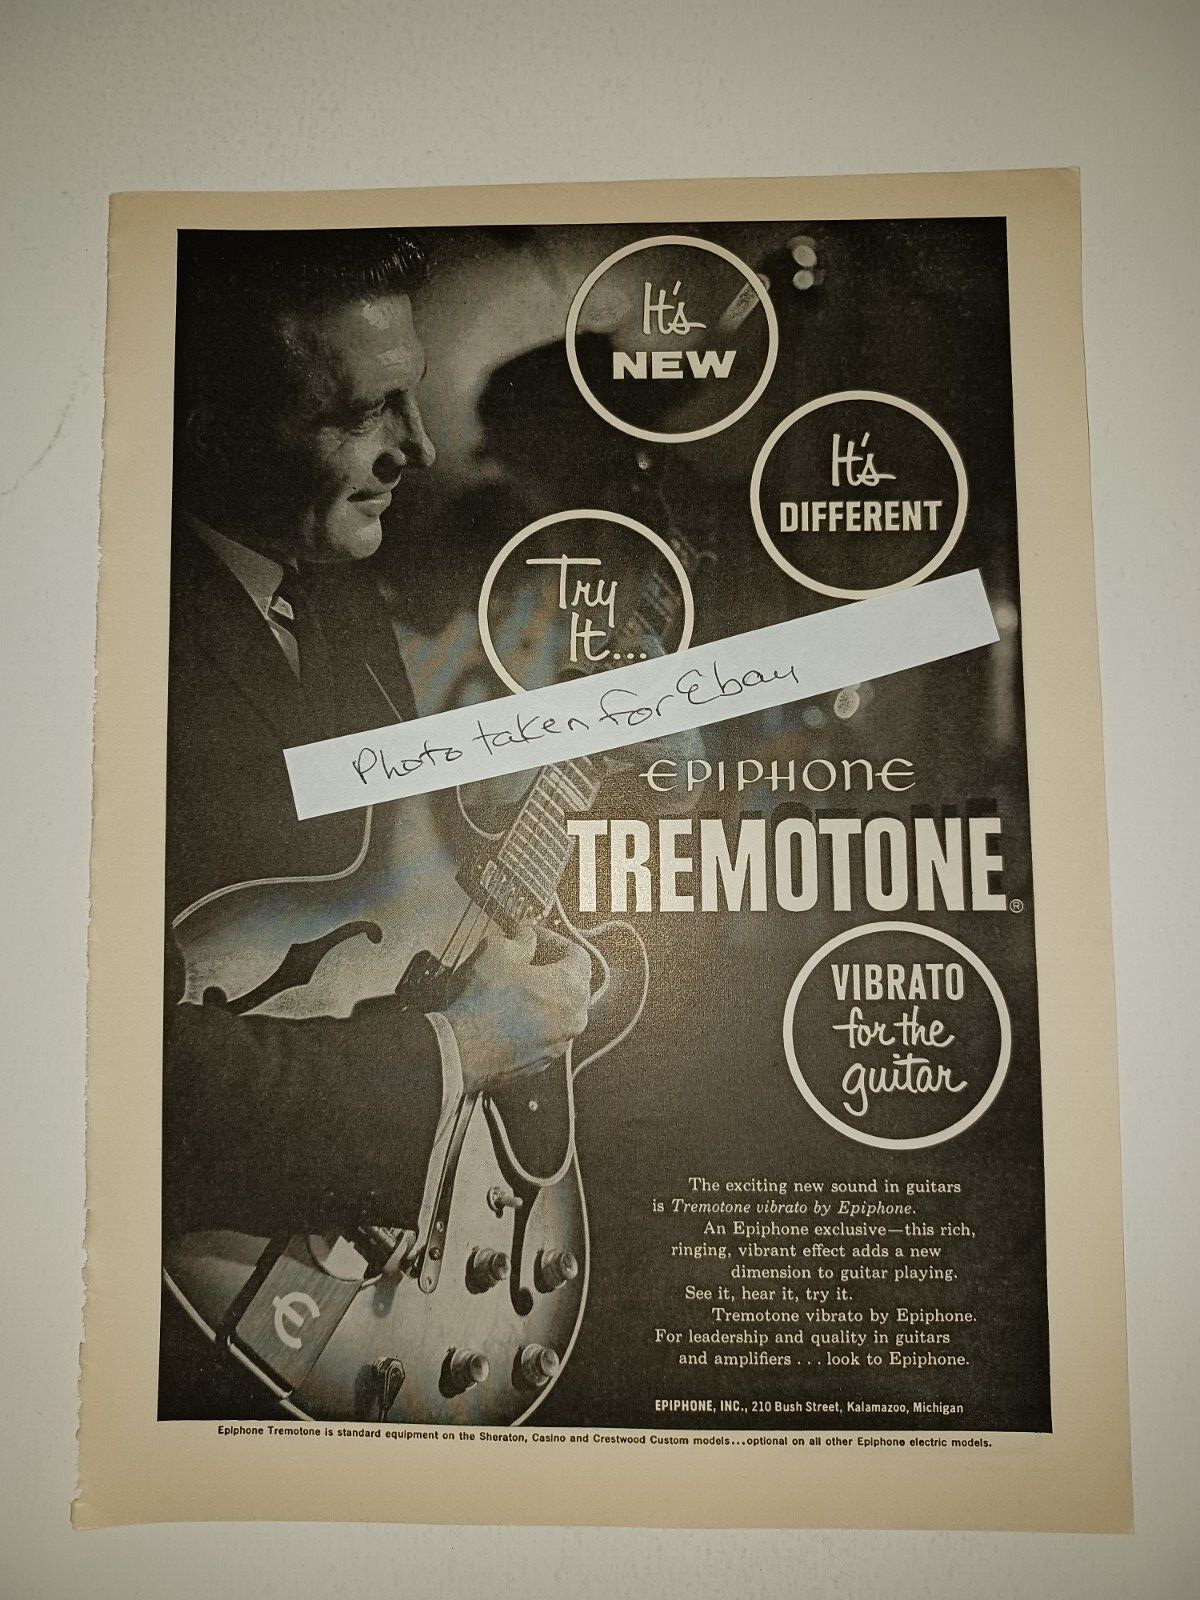 Epiphone Tremotone Vibrato for the Guitar early 60s 8x11 Magazine Ad